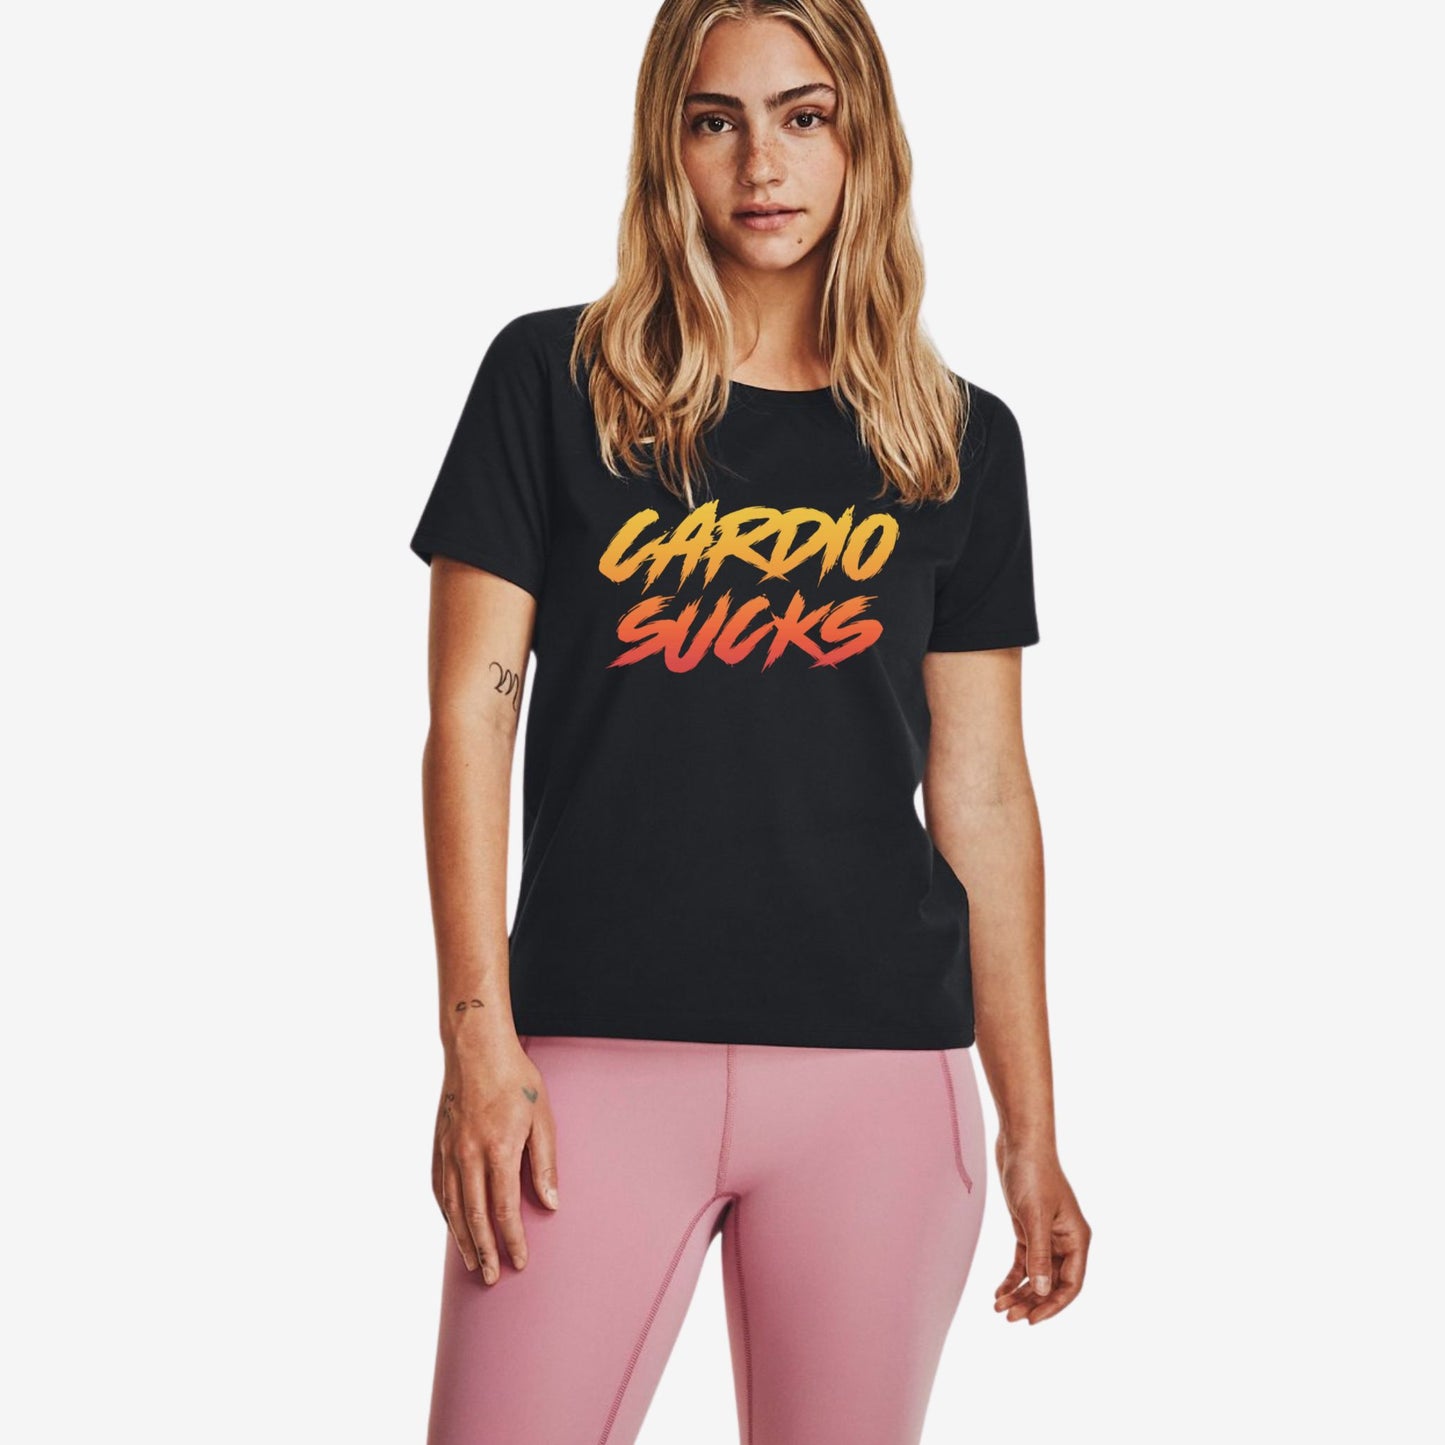 Apocalypse Club Cardio Sucks T-Shirt